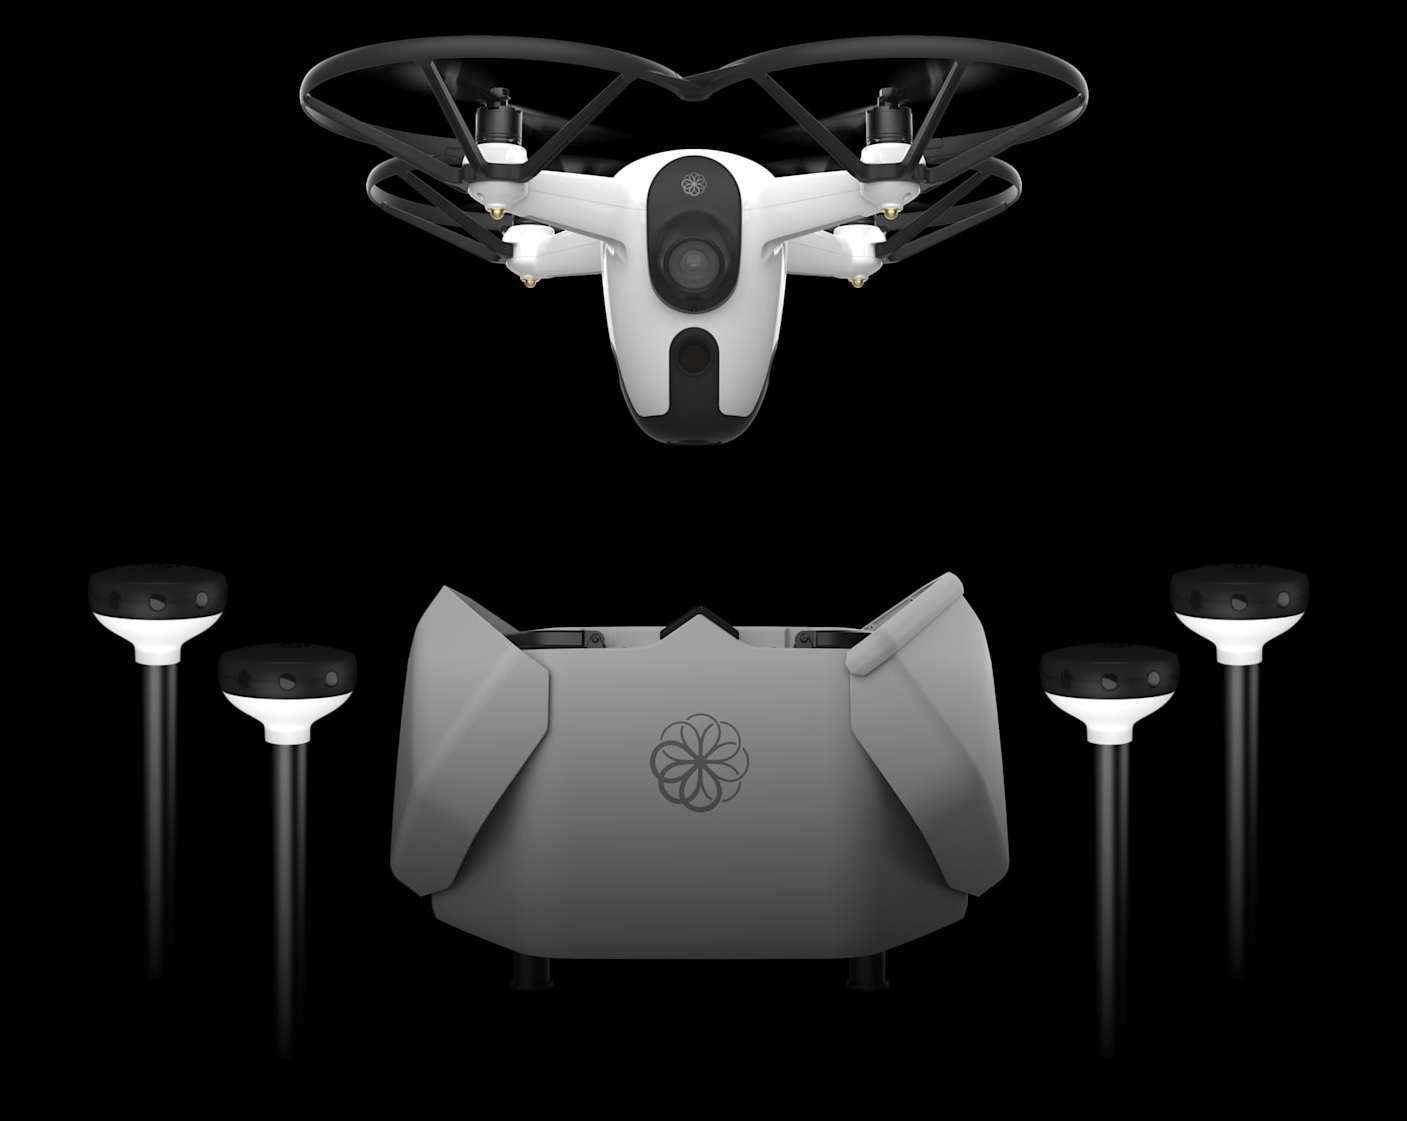 The Future of Home Security Autonomous drones